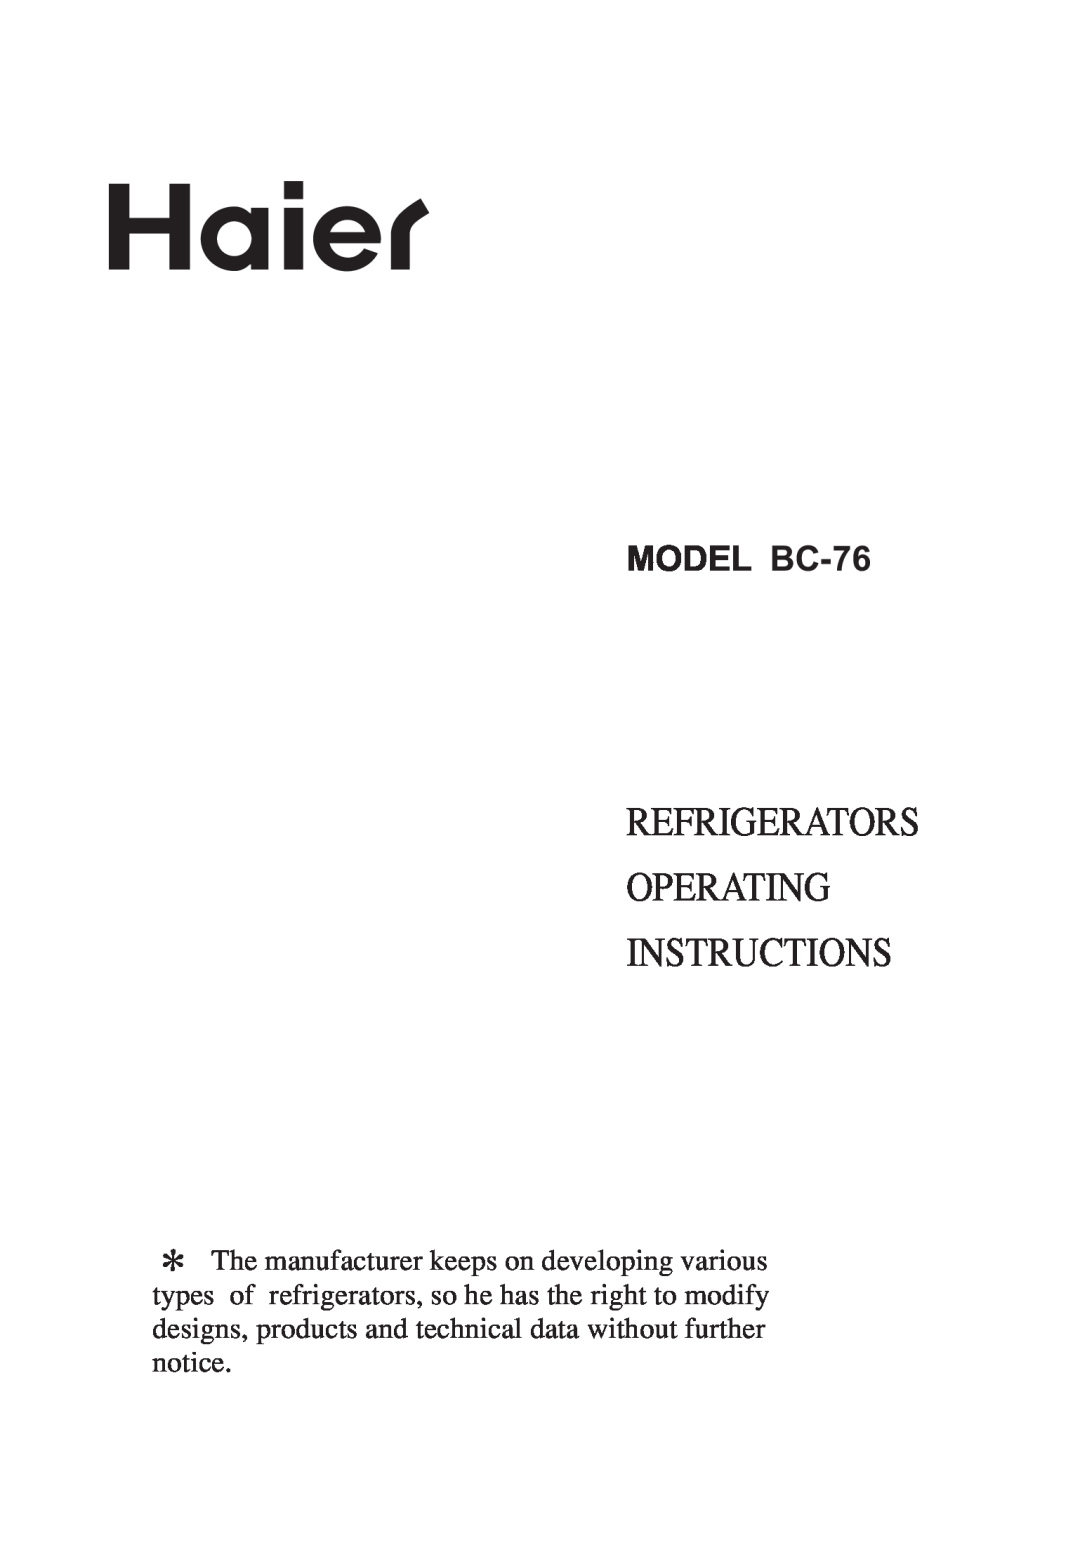 Haier BC-76 operating instructions Lemair, Refrigerators Operating Instructions, MODEL BCRQ--7685M, No 